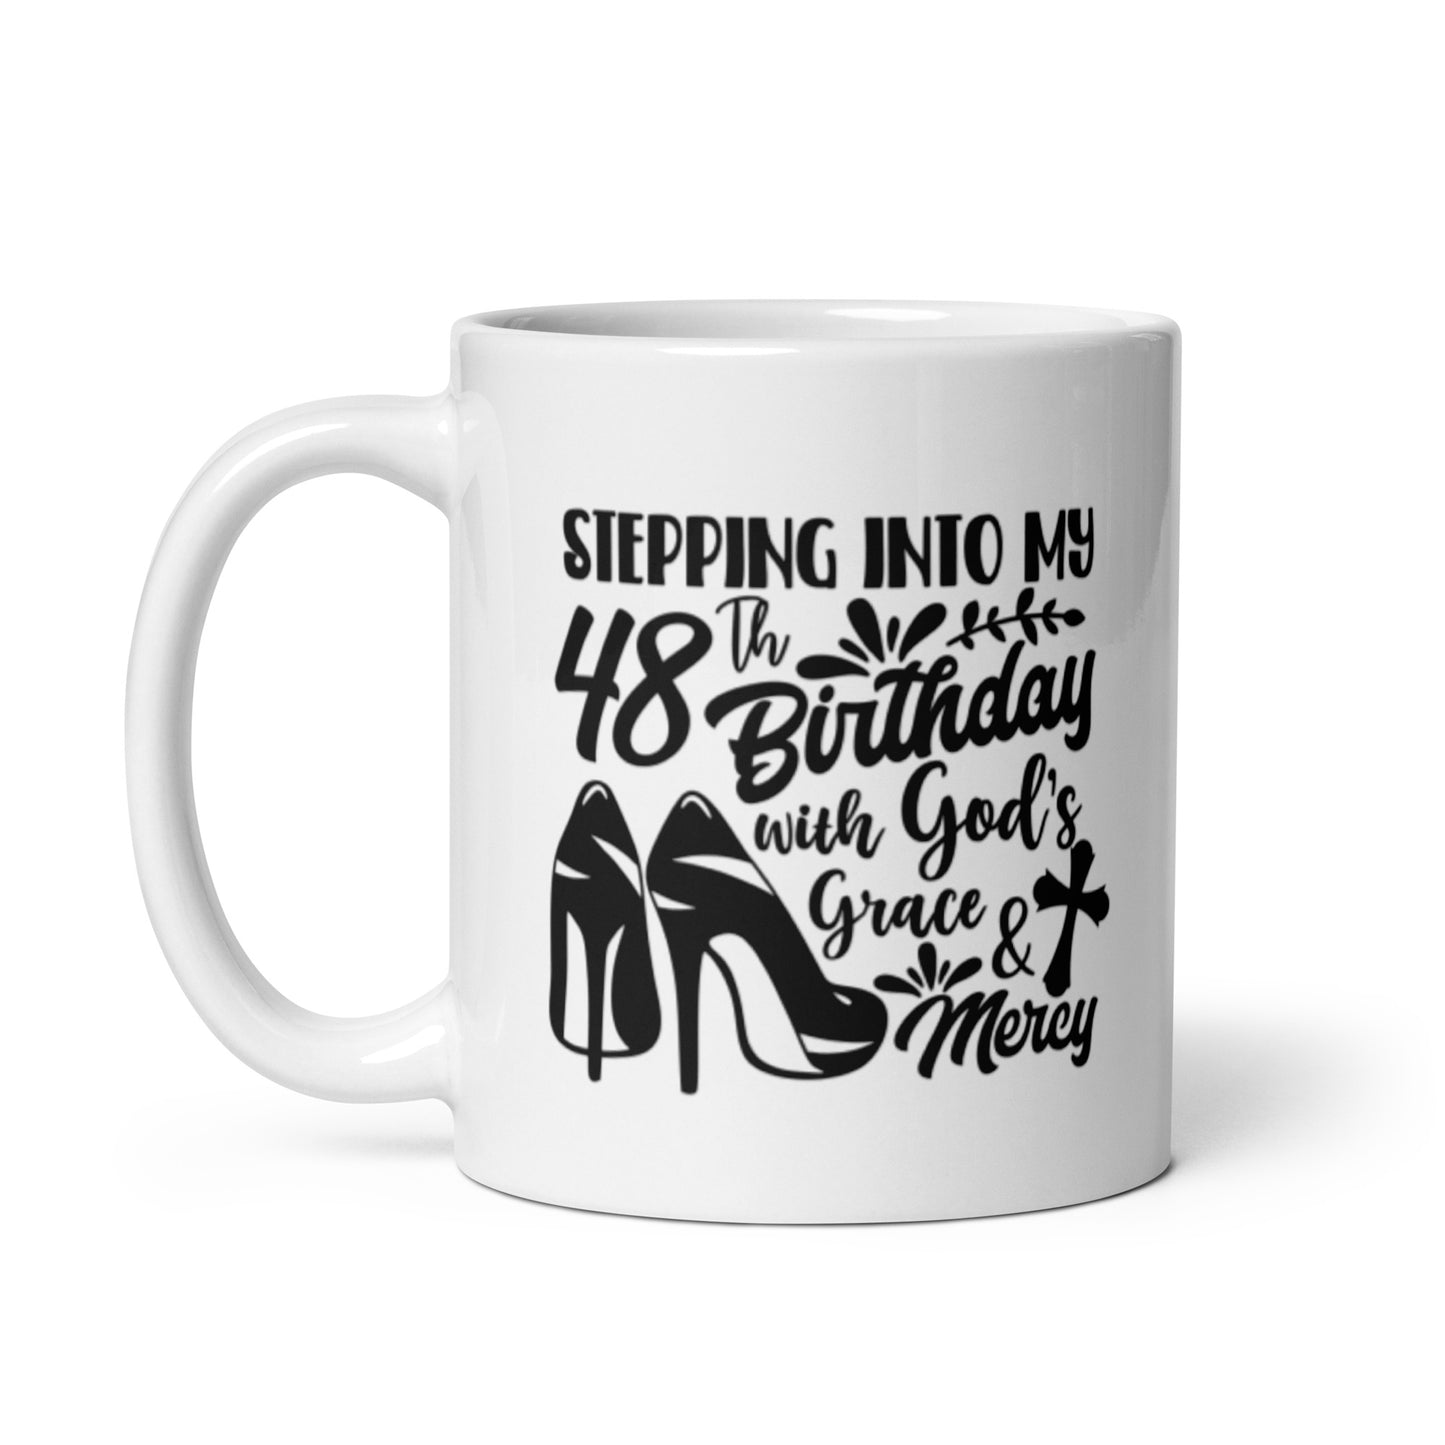 Stepping Into My 48th Birthday with God's Grace & Mercy White Ceramic Mug